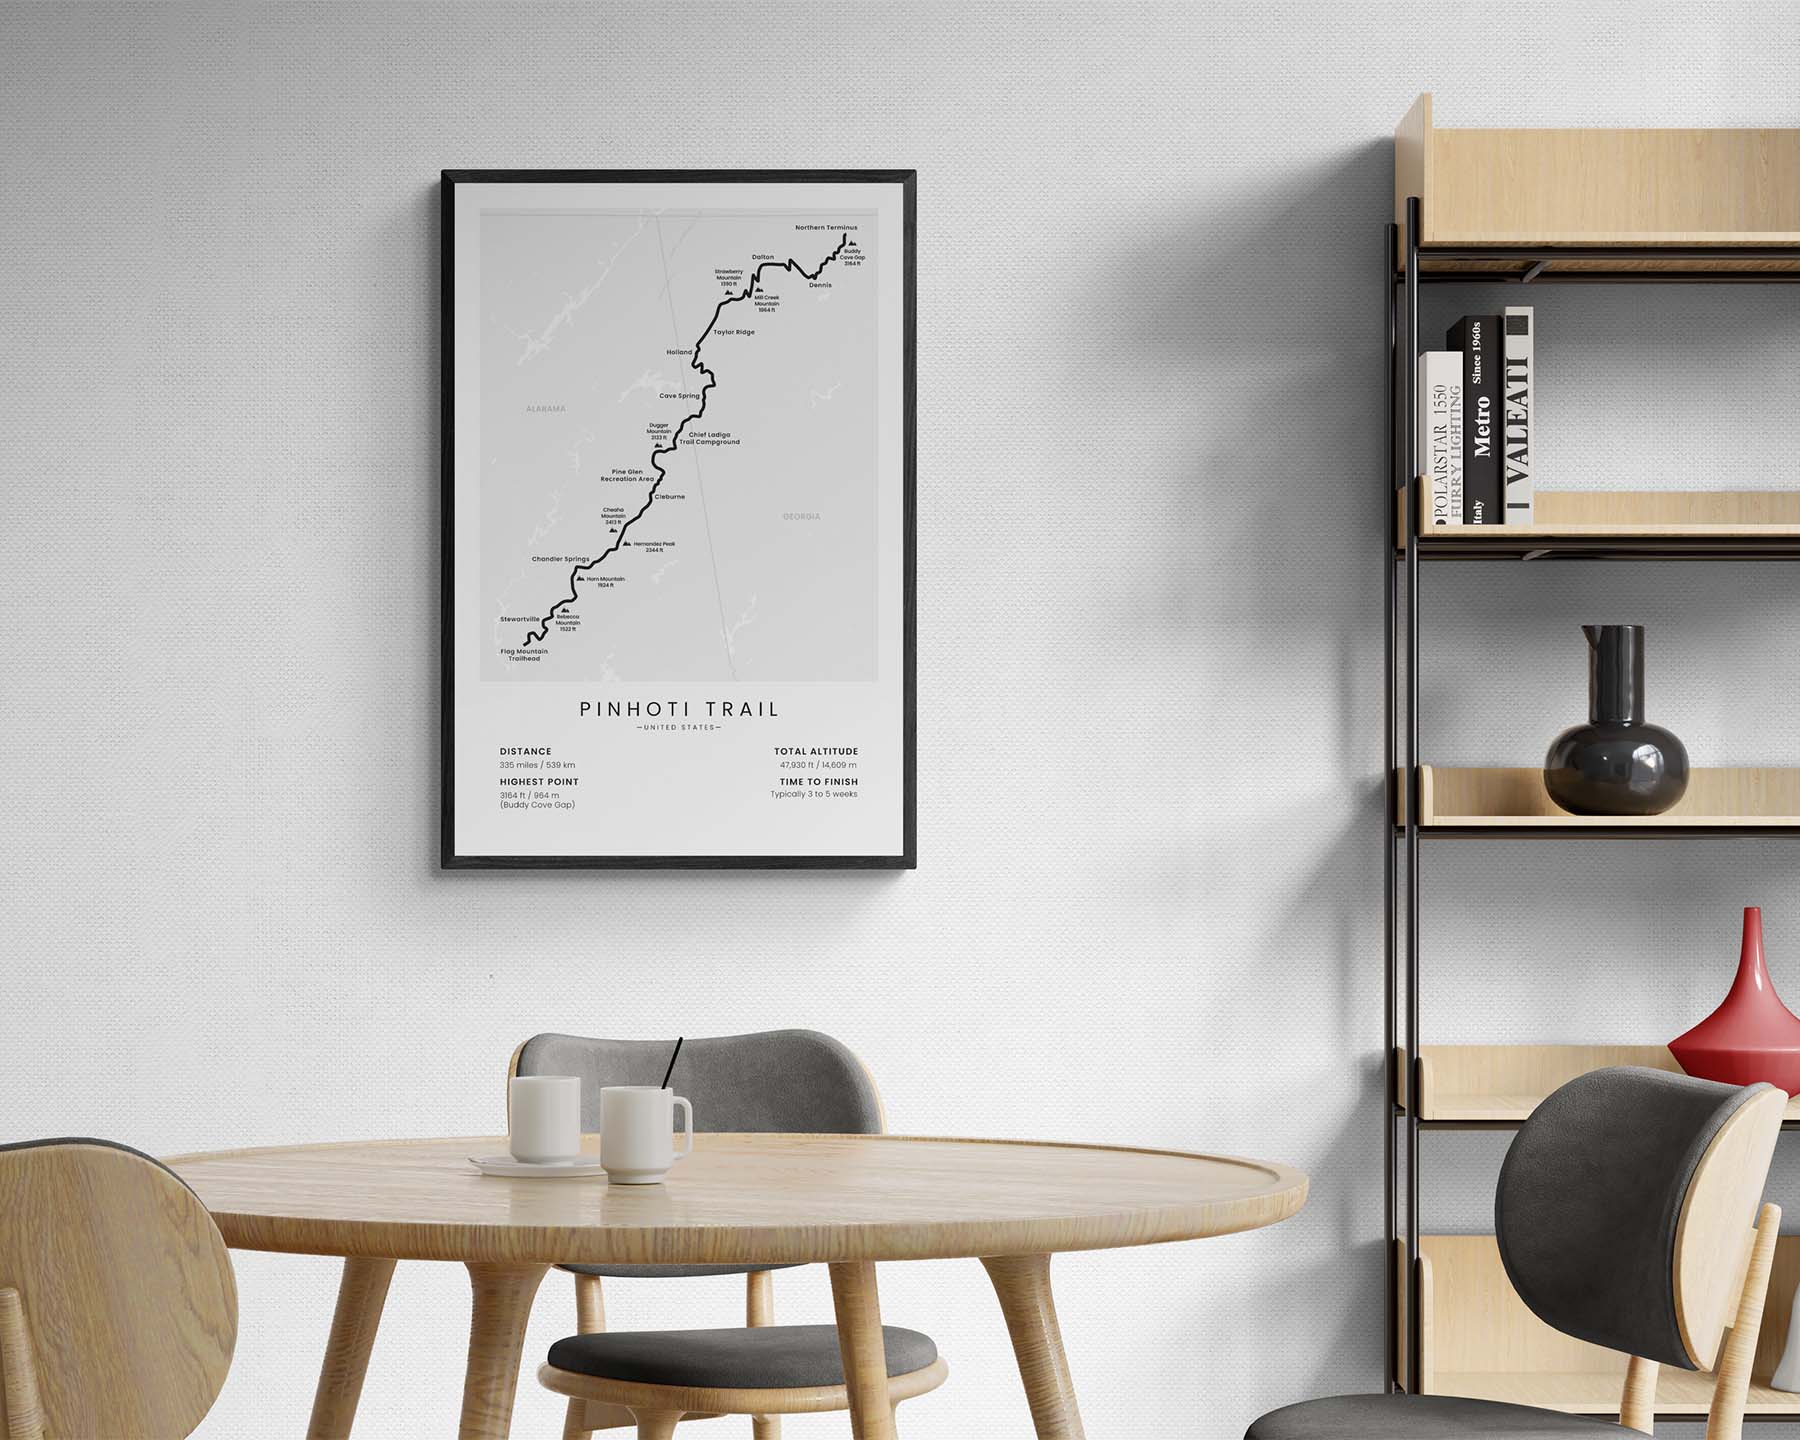 Pinhoti Trail (United States) Poster in minimalist room decor